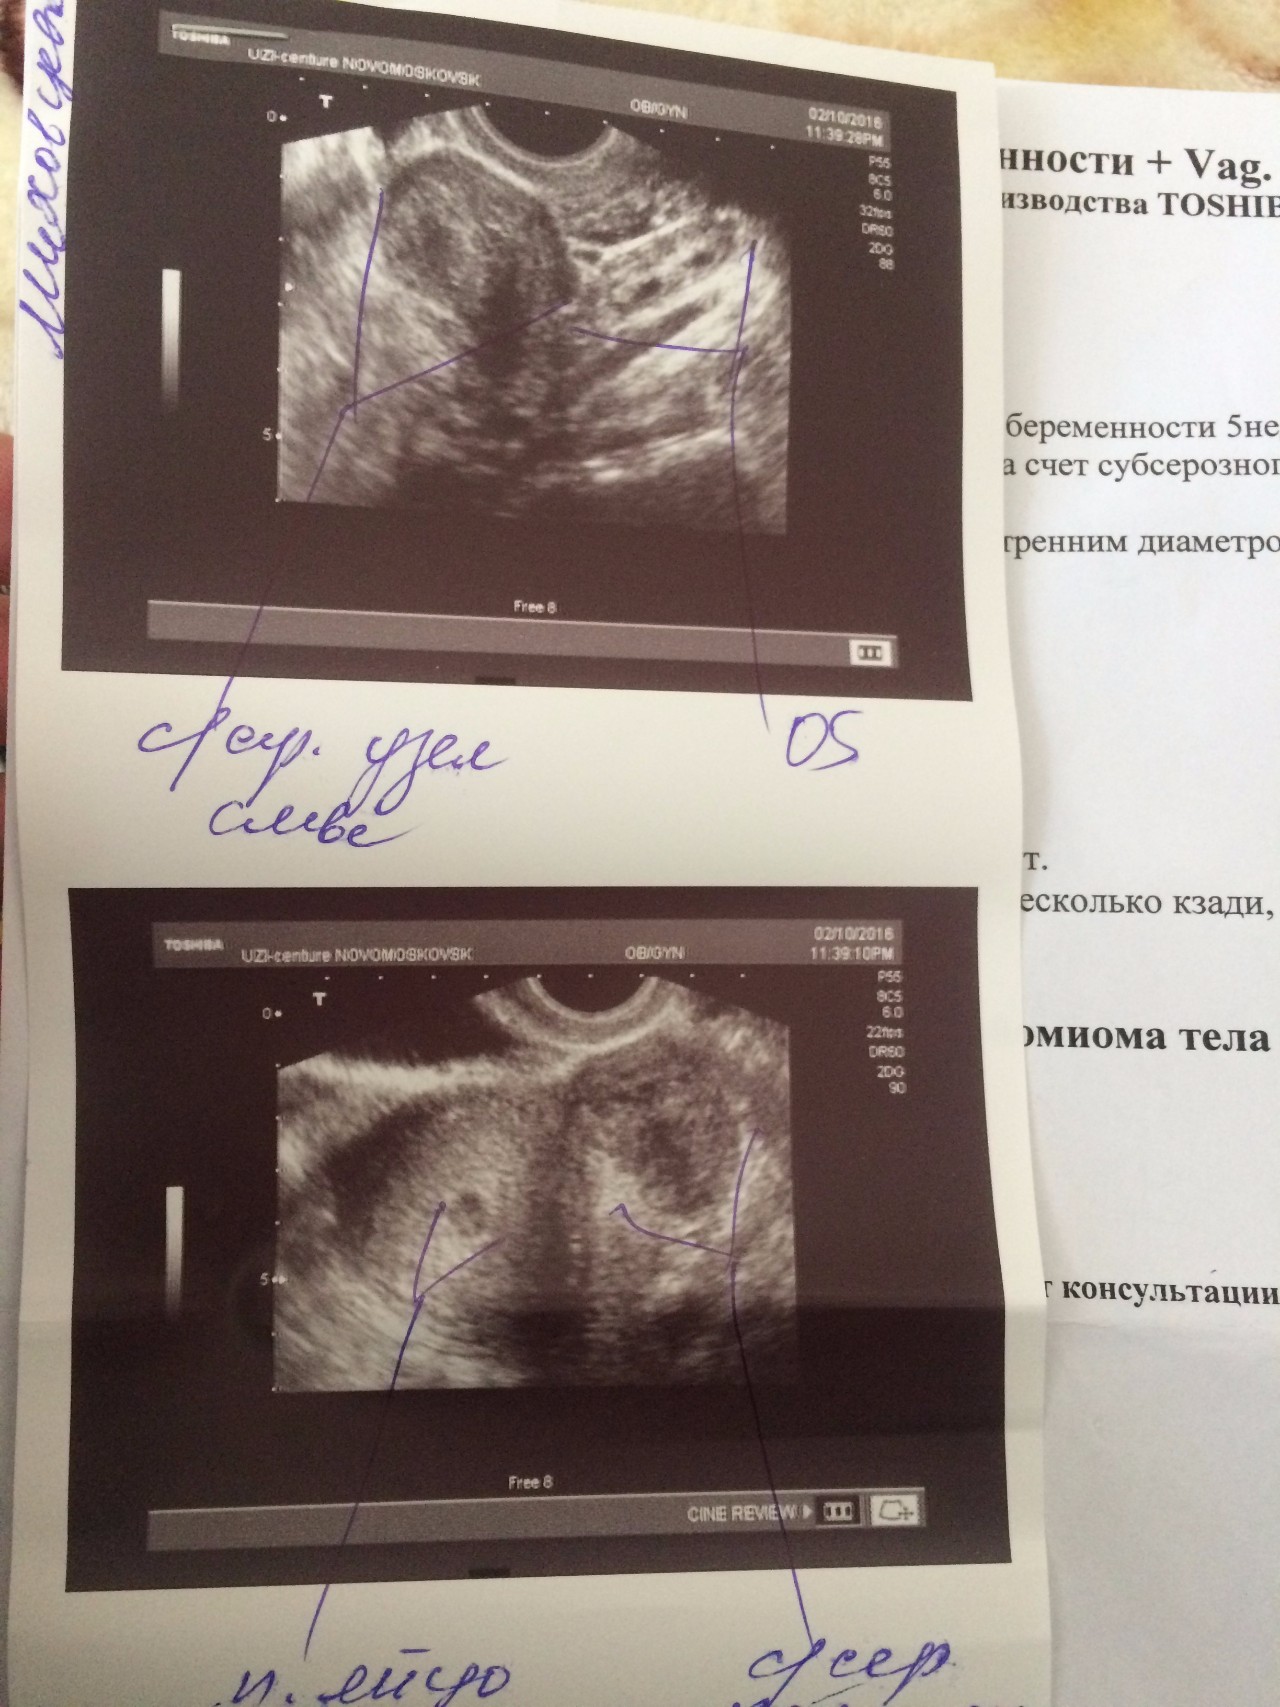 оргазм и гипертонус матки при беременности фото 35